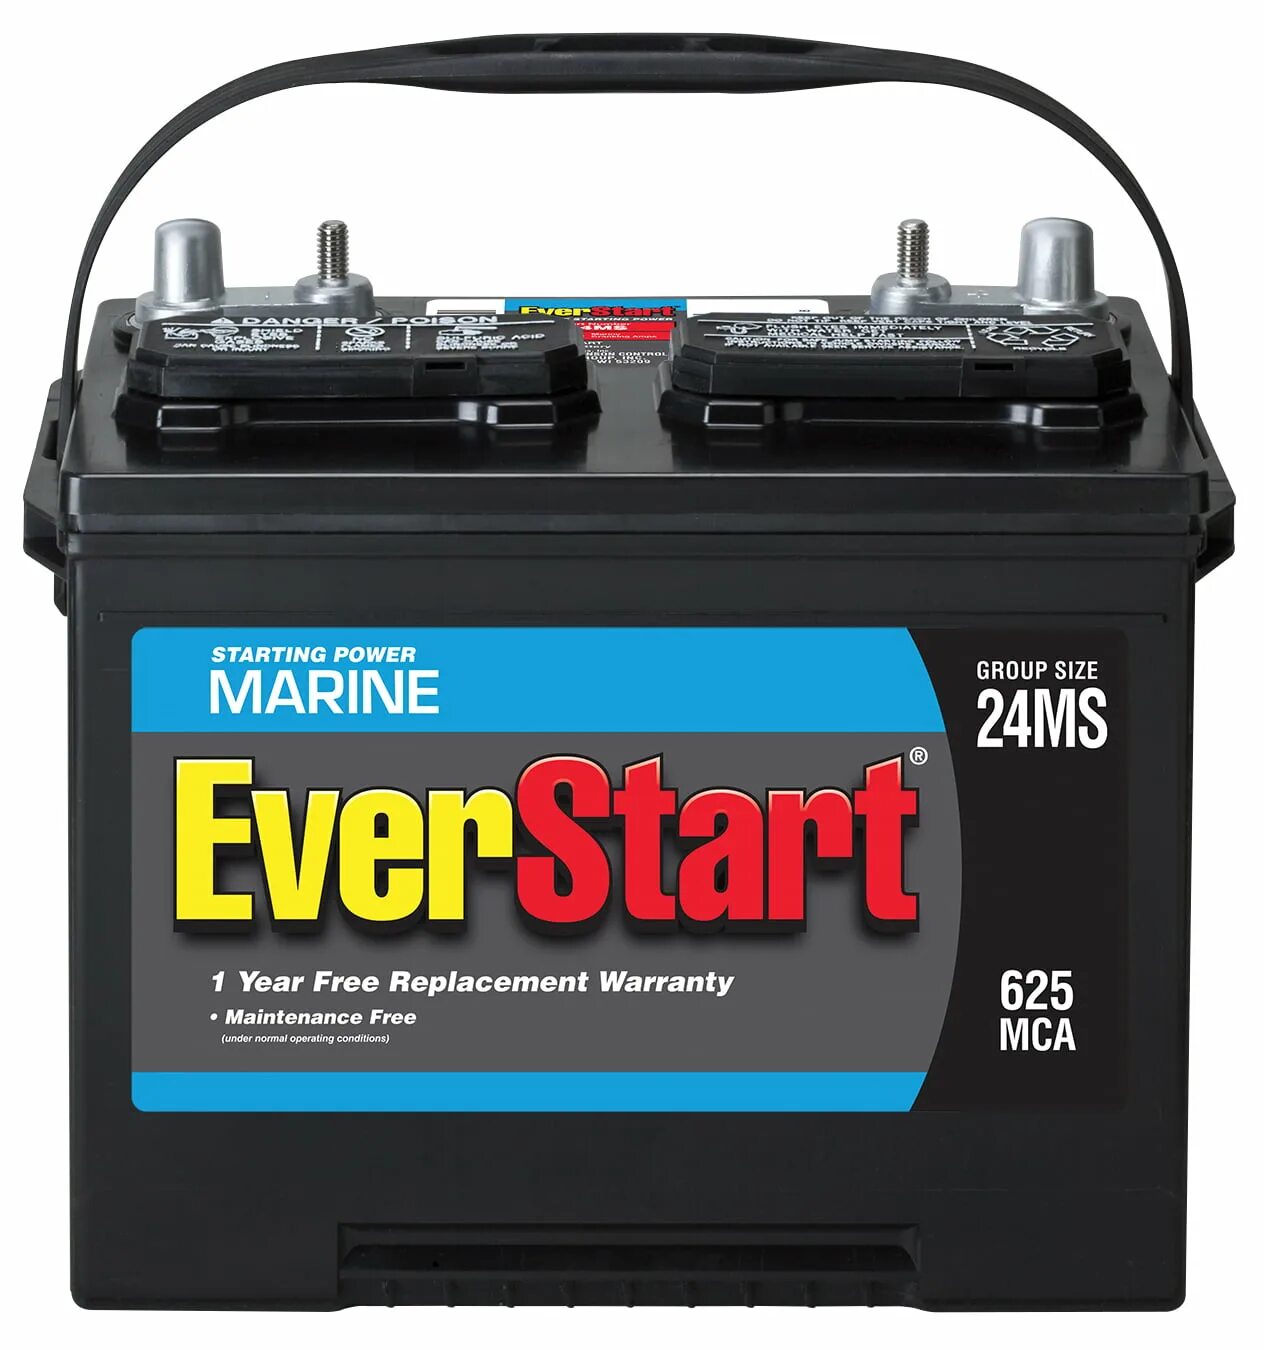 Find battery. АКБ ever start Maxx h5. Everstart lead acid Marine starting Battery, Group Size 24ms - 1000 MCA (12 Volt/1000 MCA). АКБ ever start AGM для мотоцикла. Ever start.